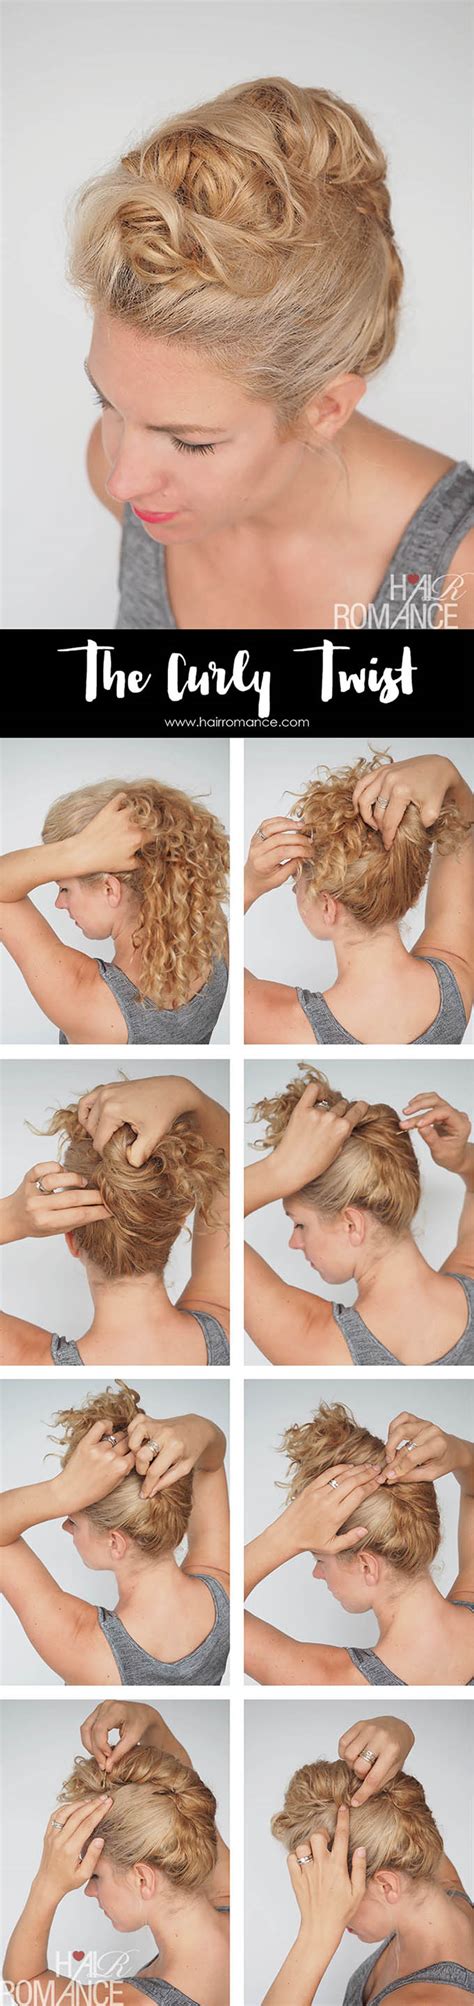 curly hair tutorial easy curly twist updo hair romance